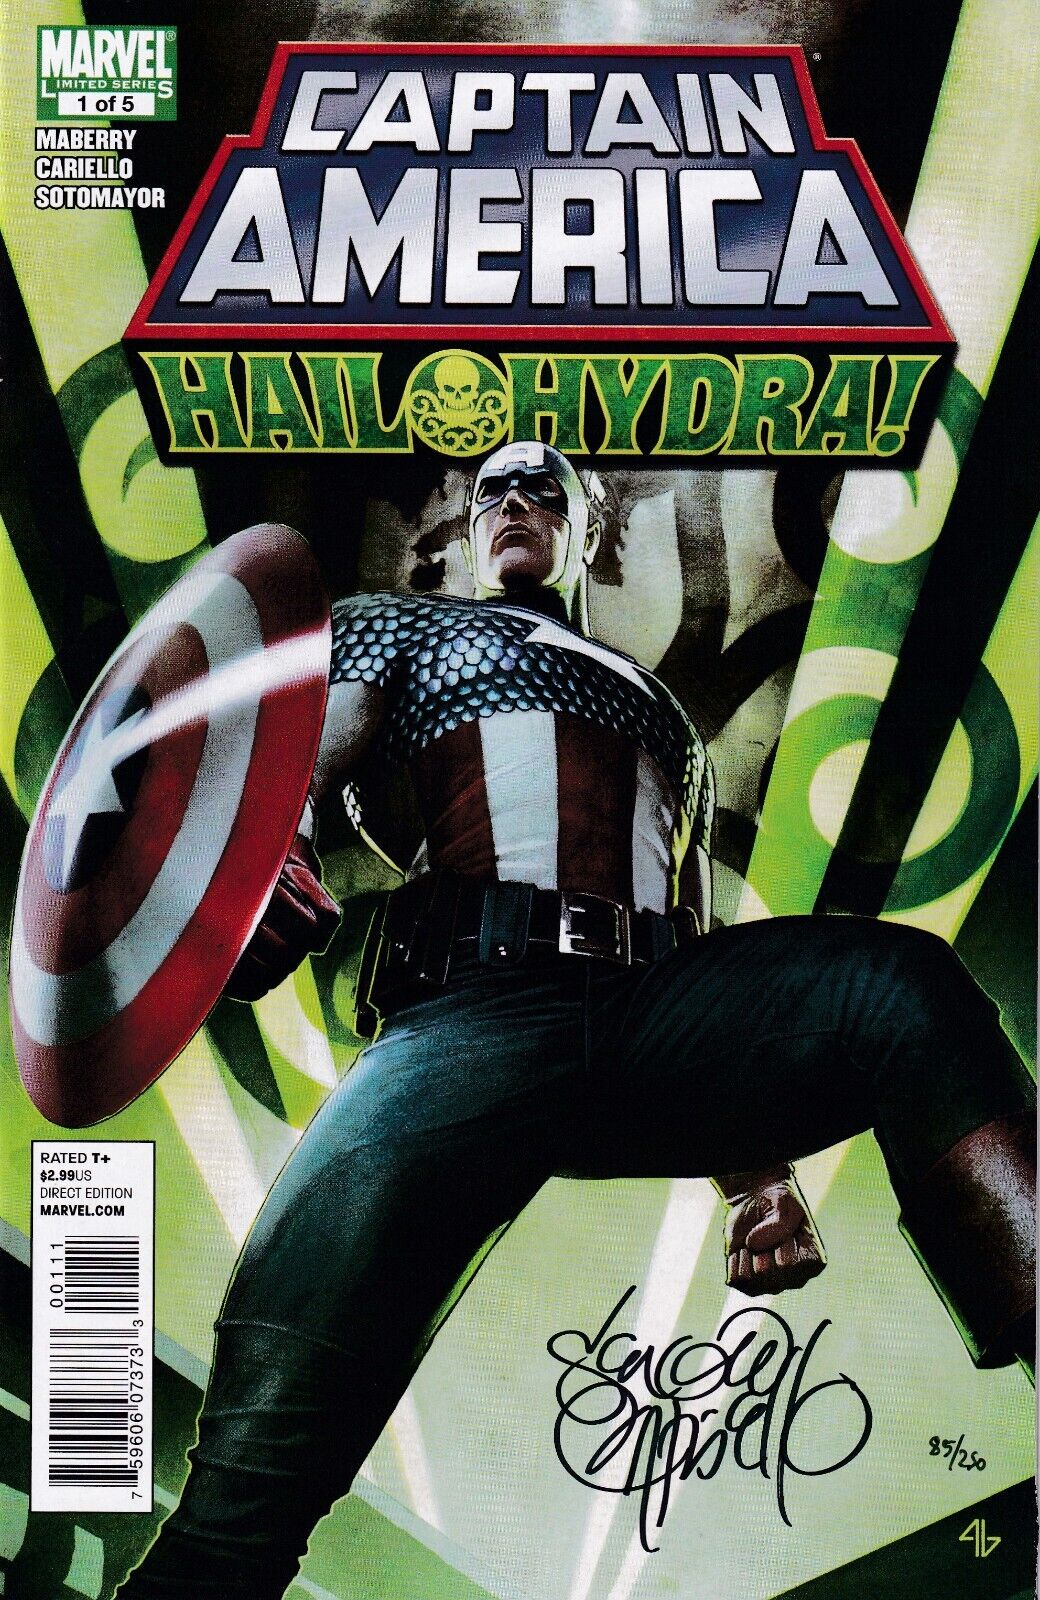 Marvel Captain America Hail Hydra #1 of 5 Signed by Sergio Cariello 85/250